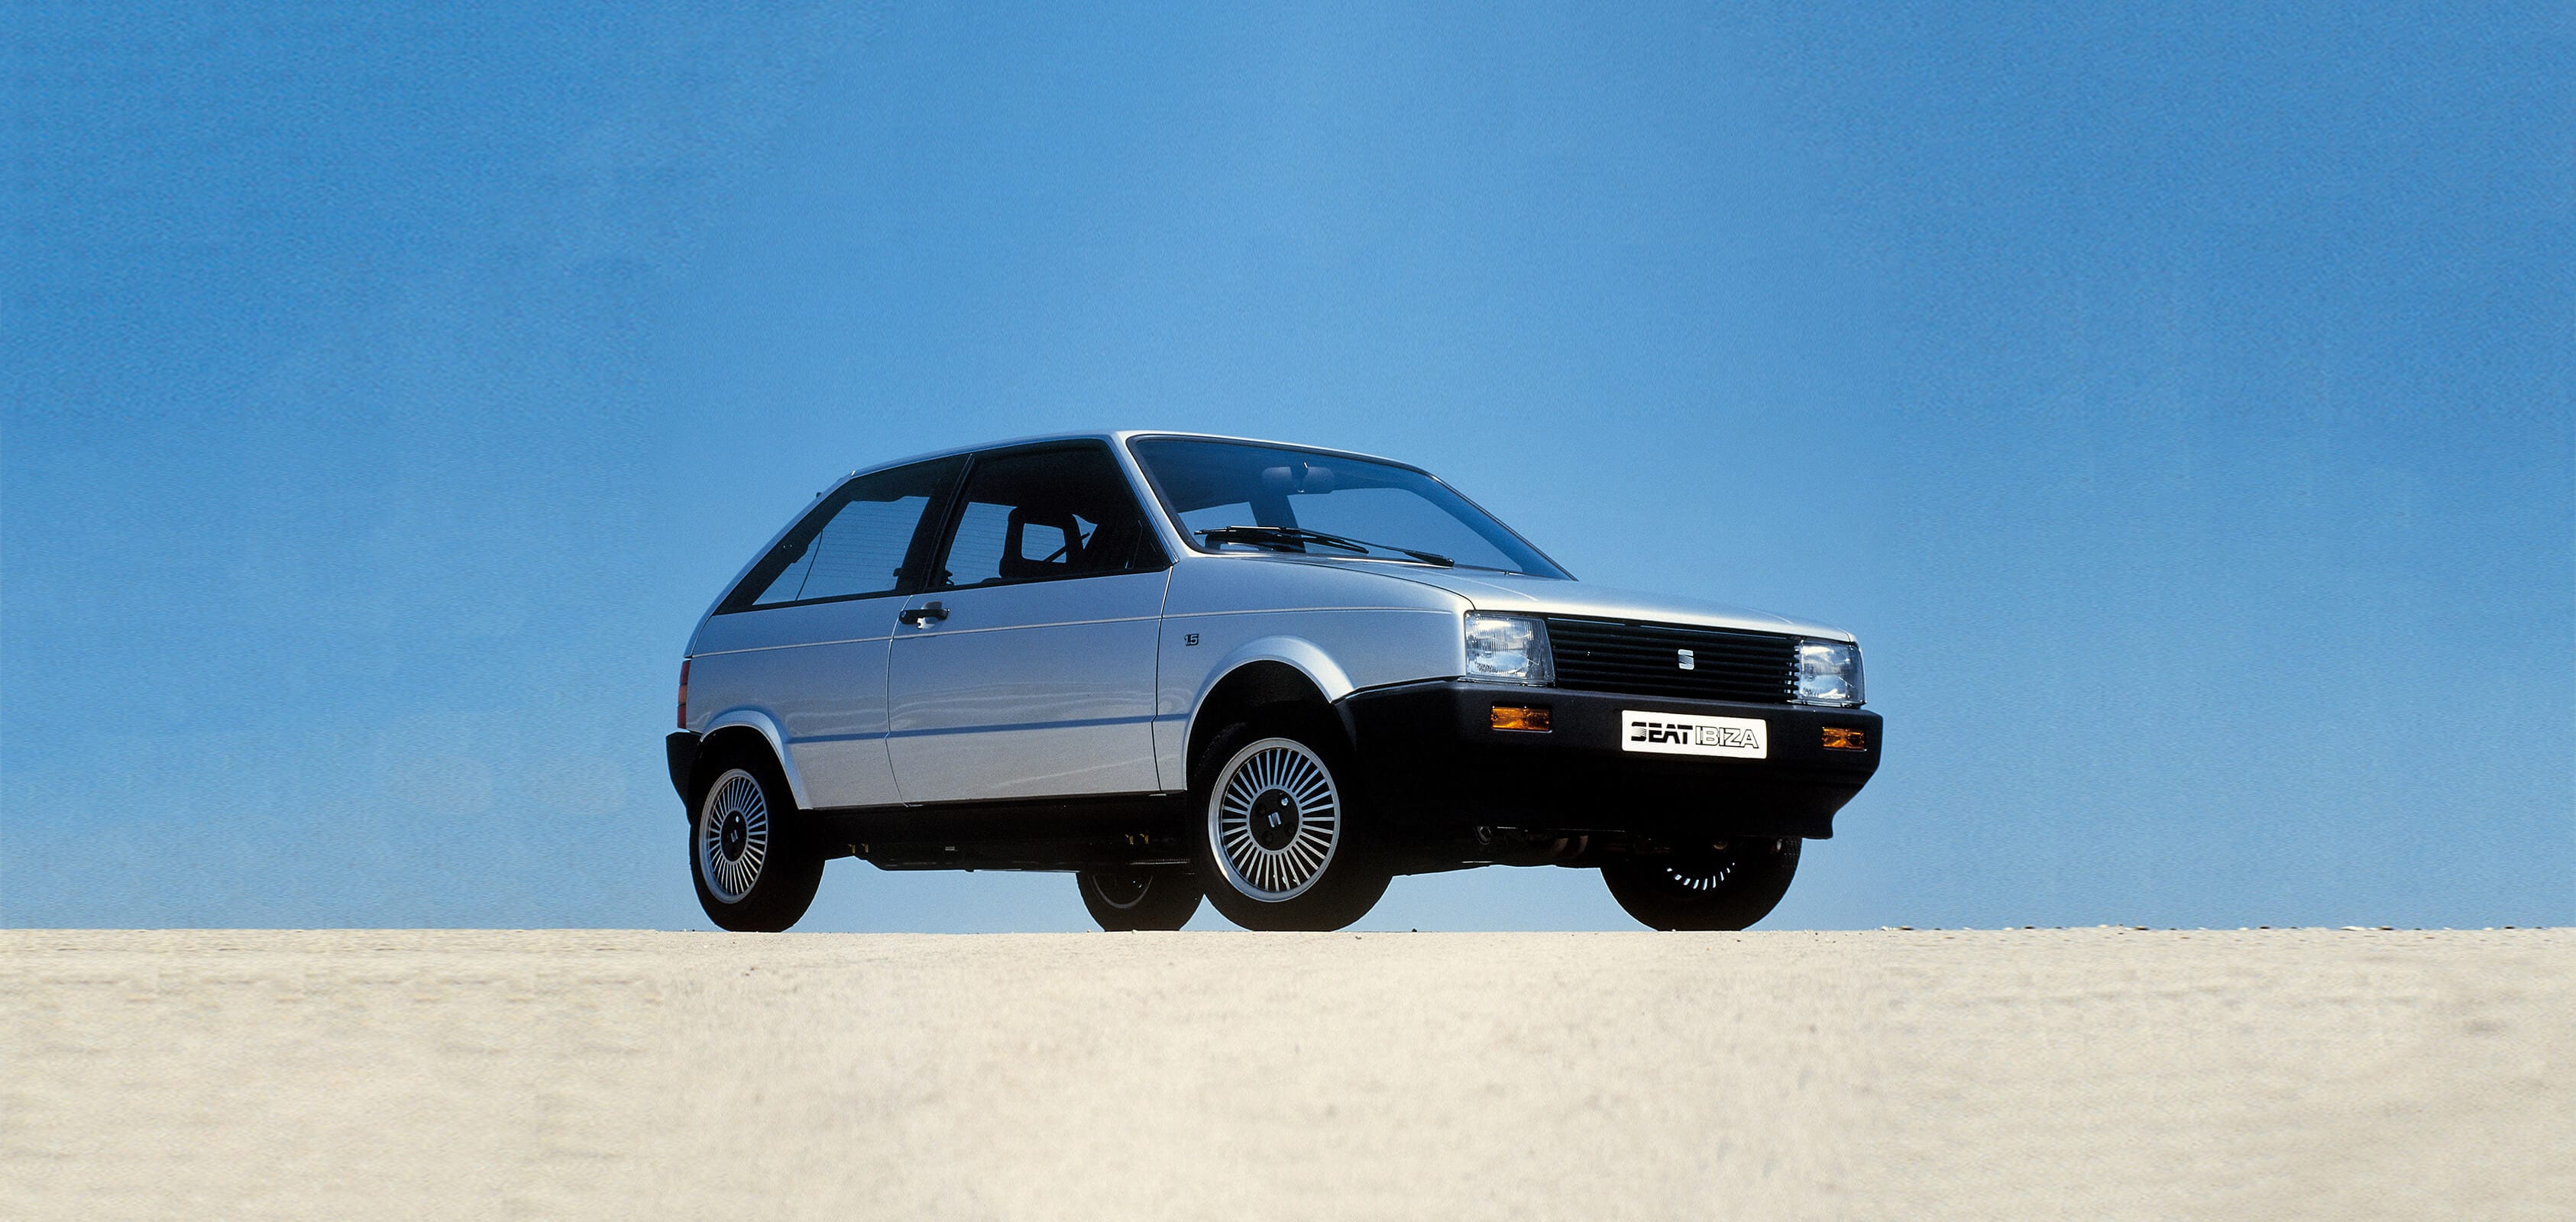 SEAT brand history 1980s - original SEAT Ibiza hatchback car